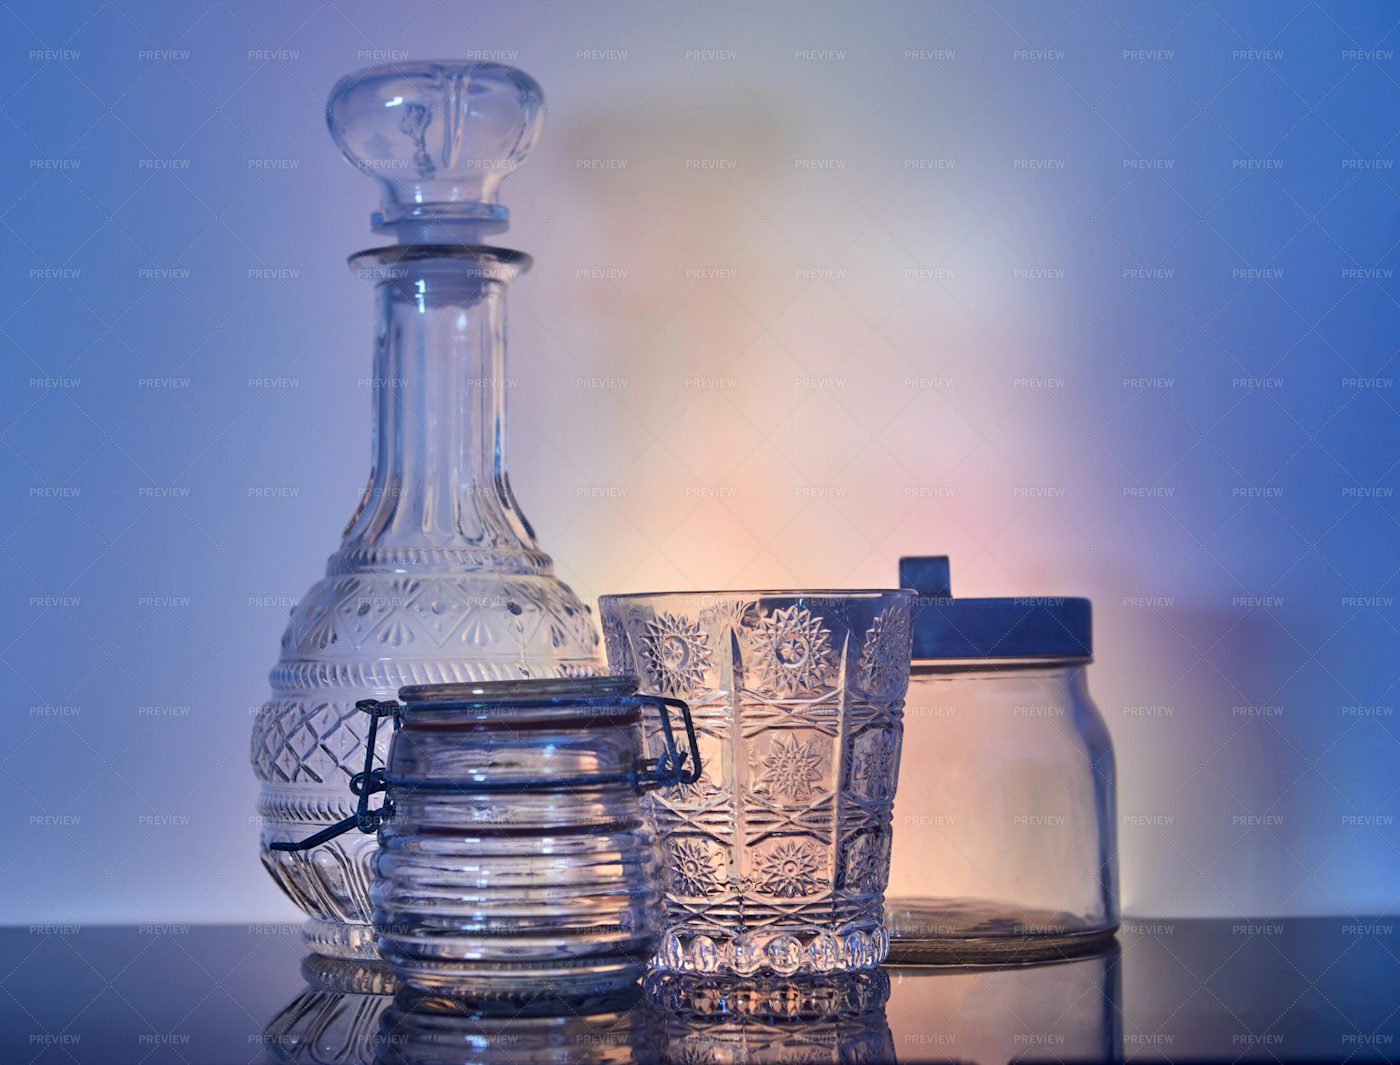 Decanter Glass And Jars: Stock Photos